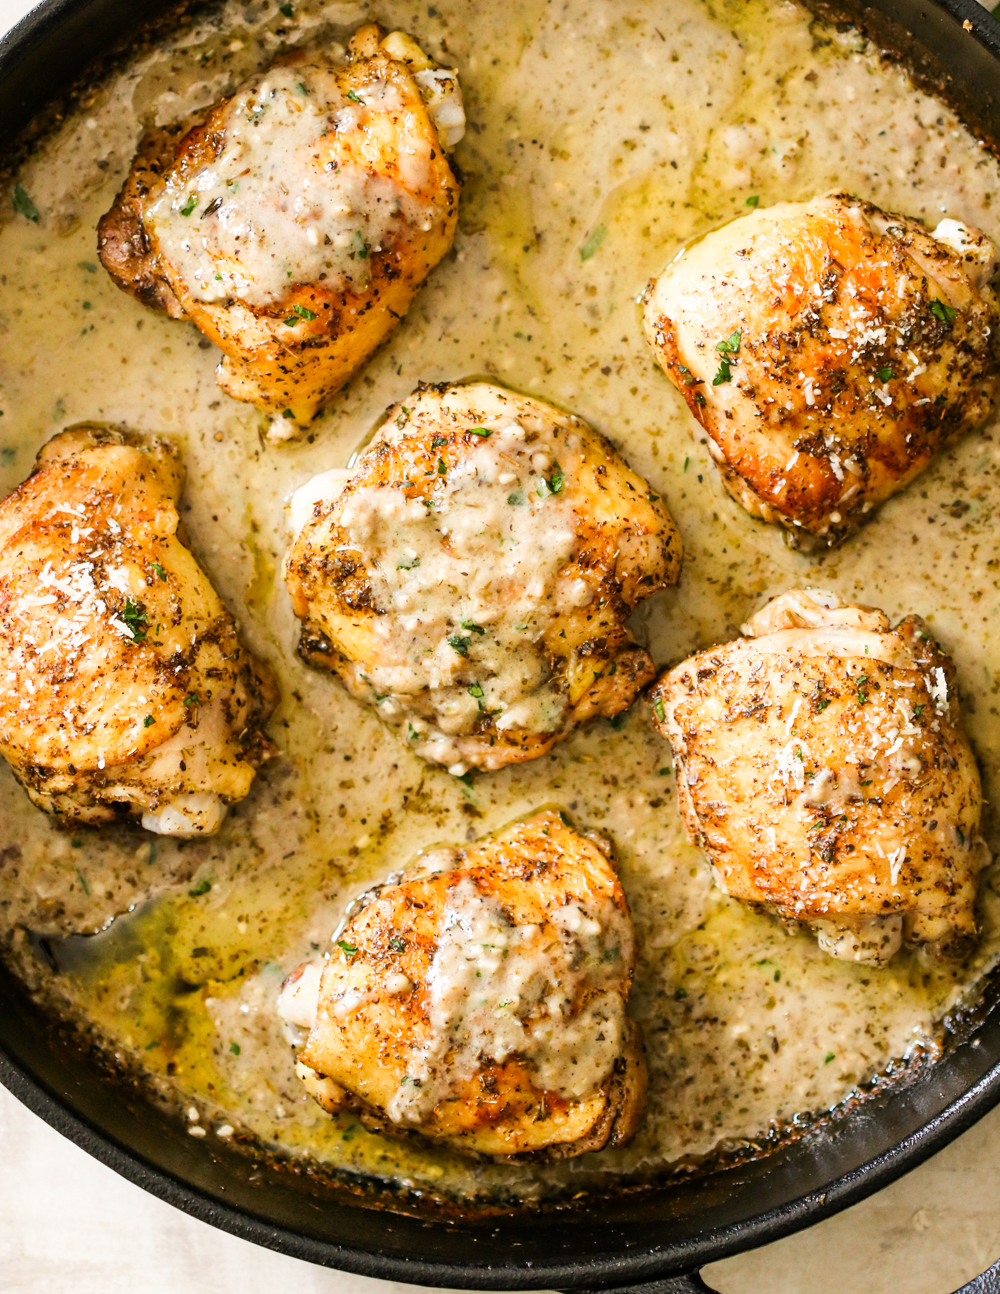 https://gimmedelicious.com/wp-content/uploads/2020/09/Baked-Chicken-with-Garlic-Parmesan-Cream-Sauce-1.jpg